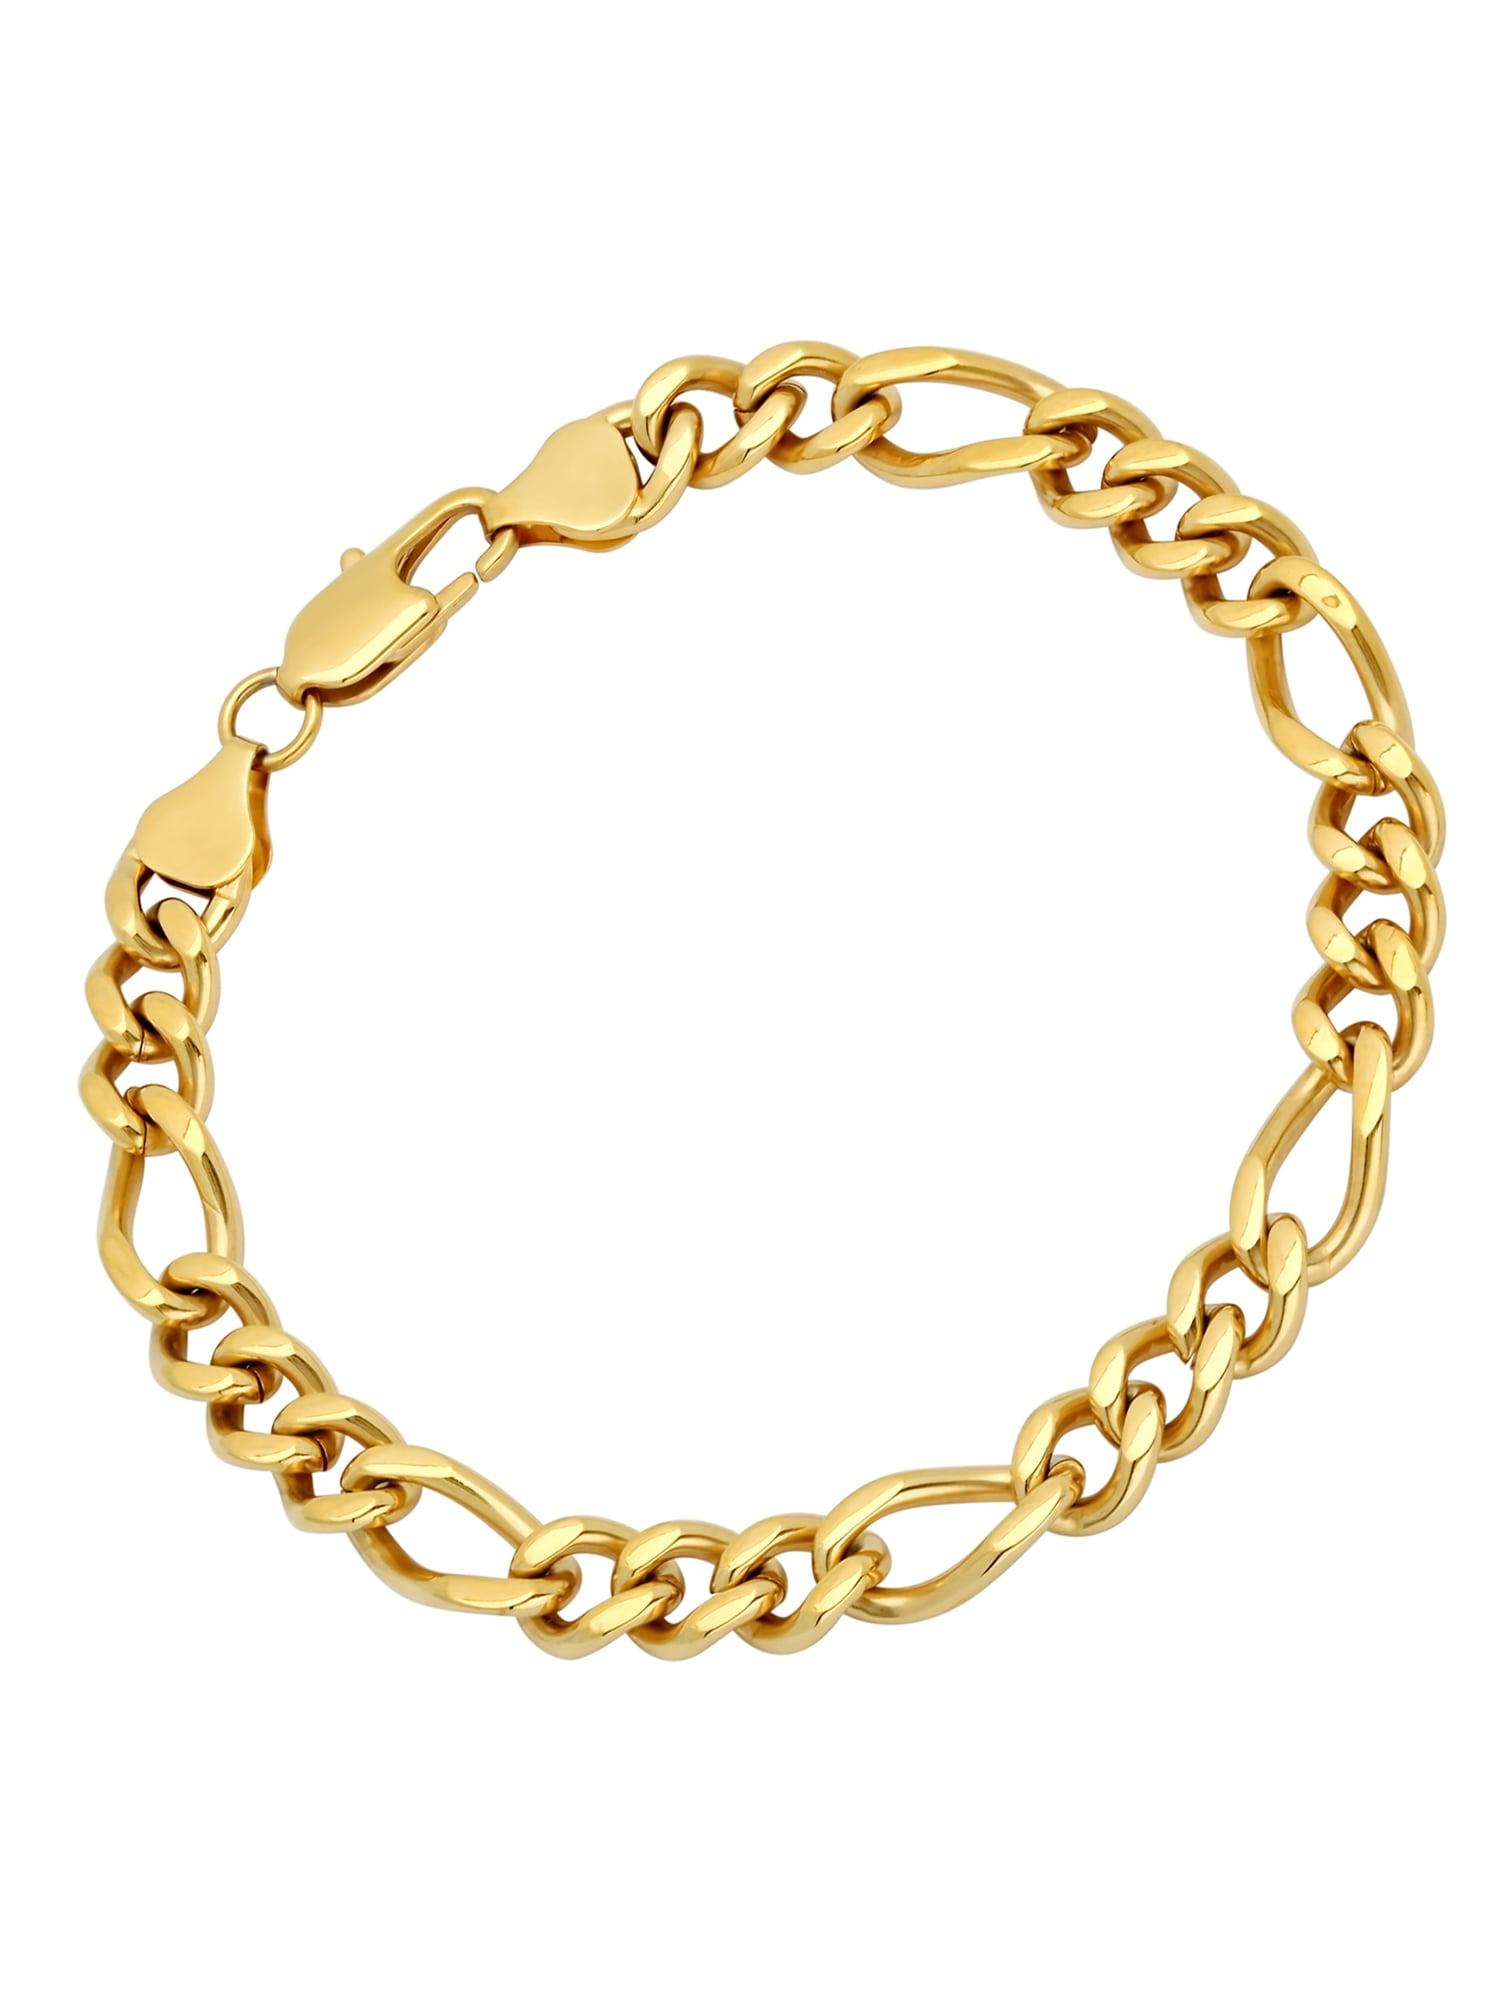 Gentlemen's Two Tone 14K Gold Plated Stainless Steel Link Bracelet Size 9" 